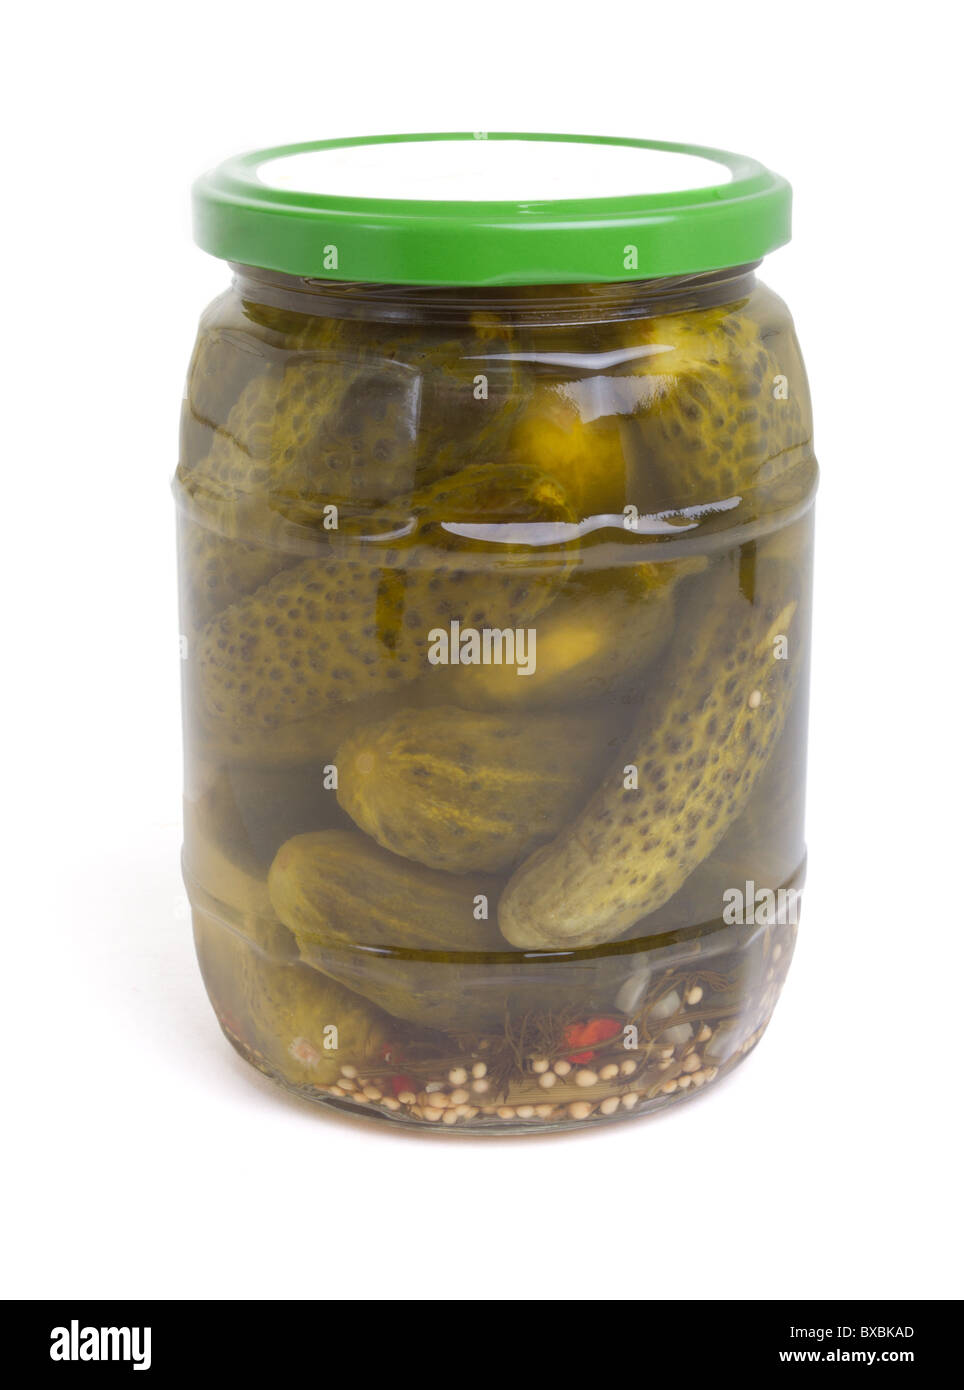 Tarro de pepinillos o dill pickle aislado en blanco. Foto de stock